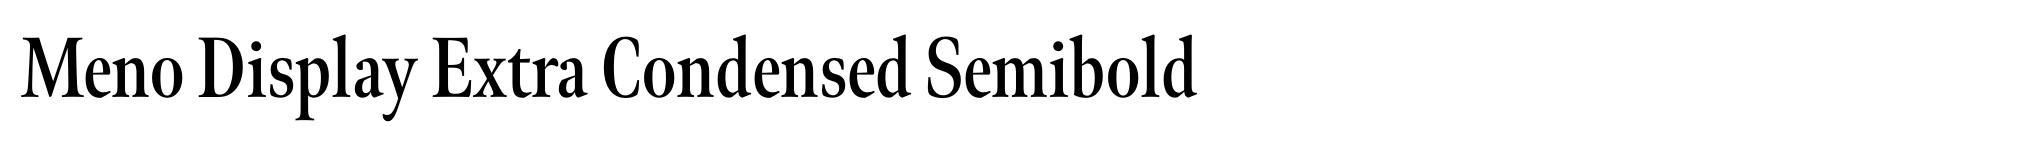 Meno Display Extra Condensed Semibold image